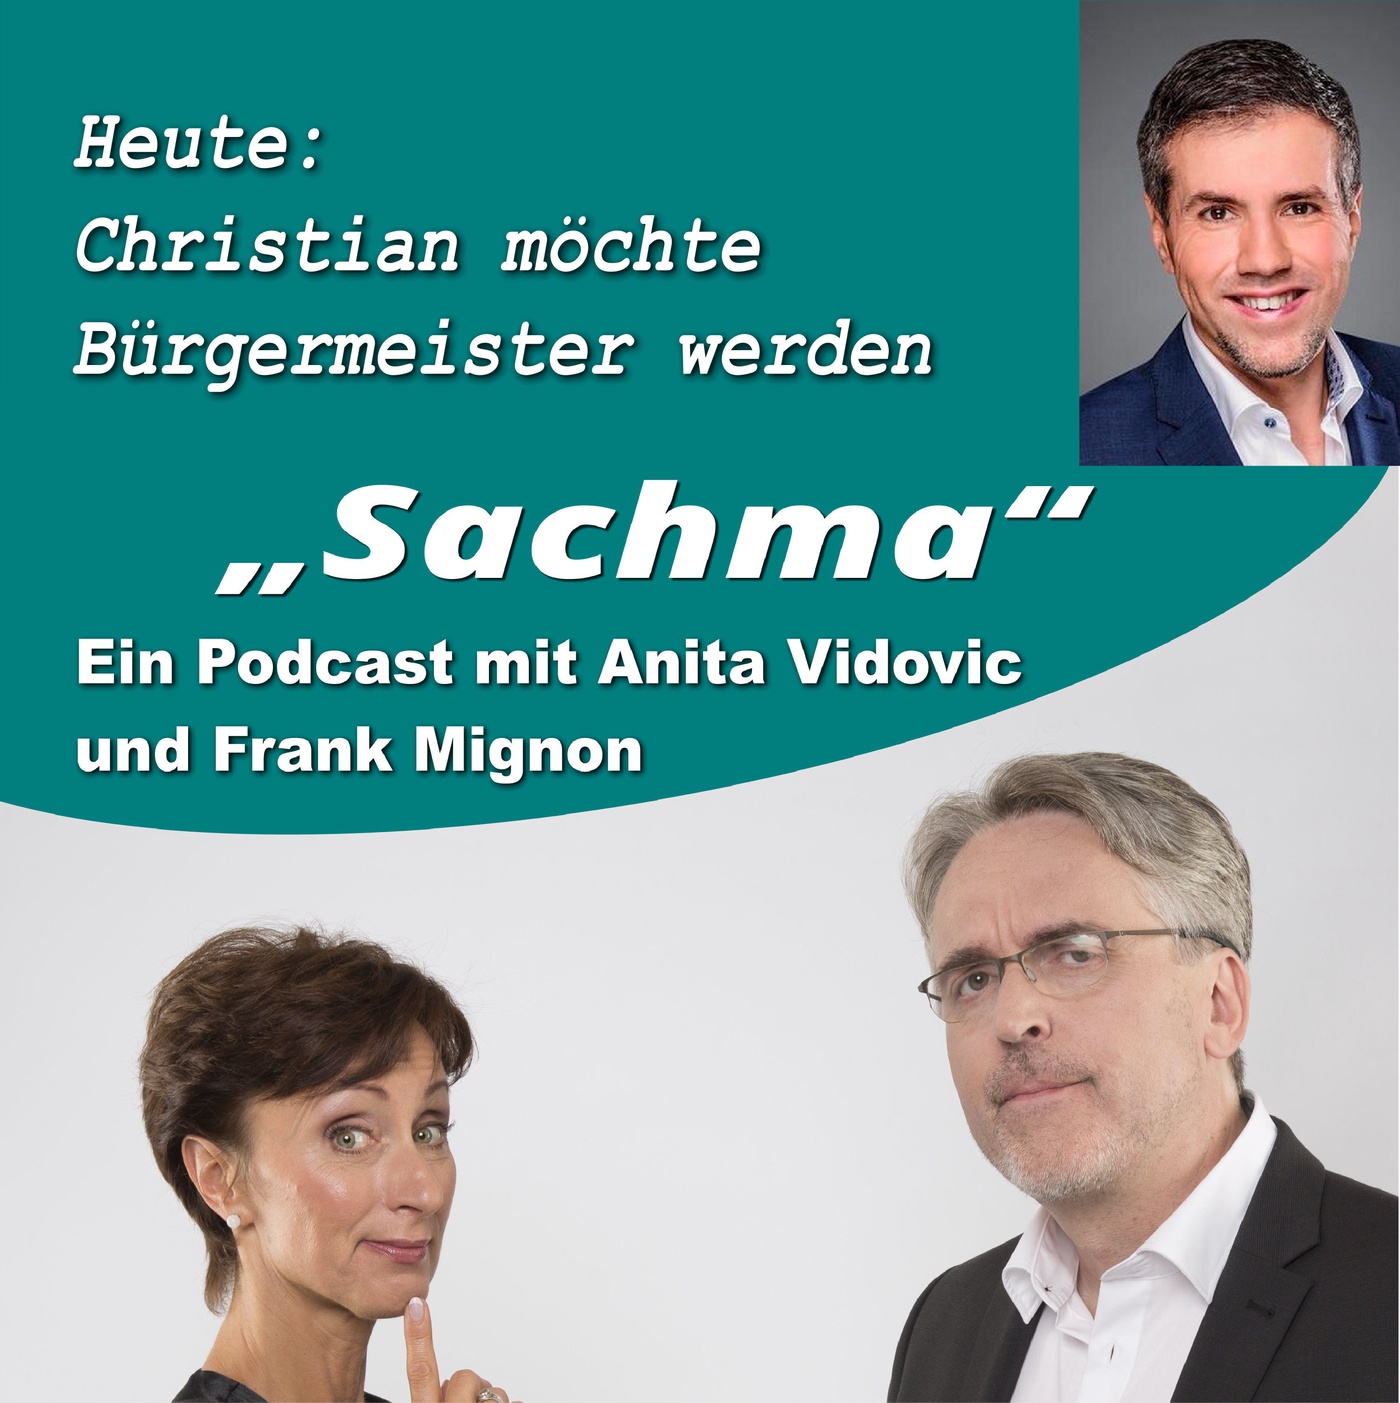 Sachma - Der Podcast - Christian möchte Bürgermeister werden